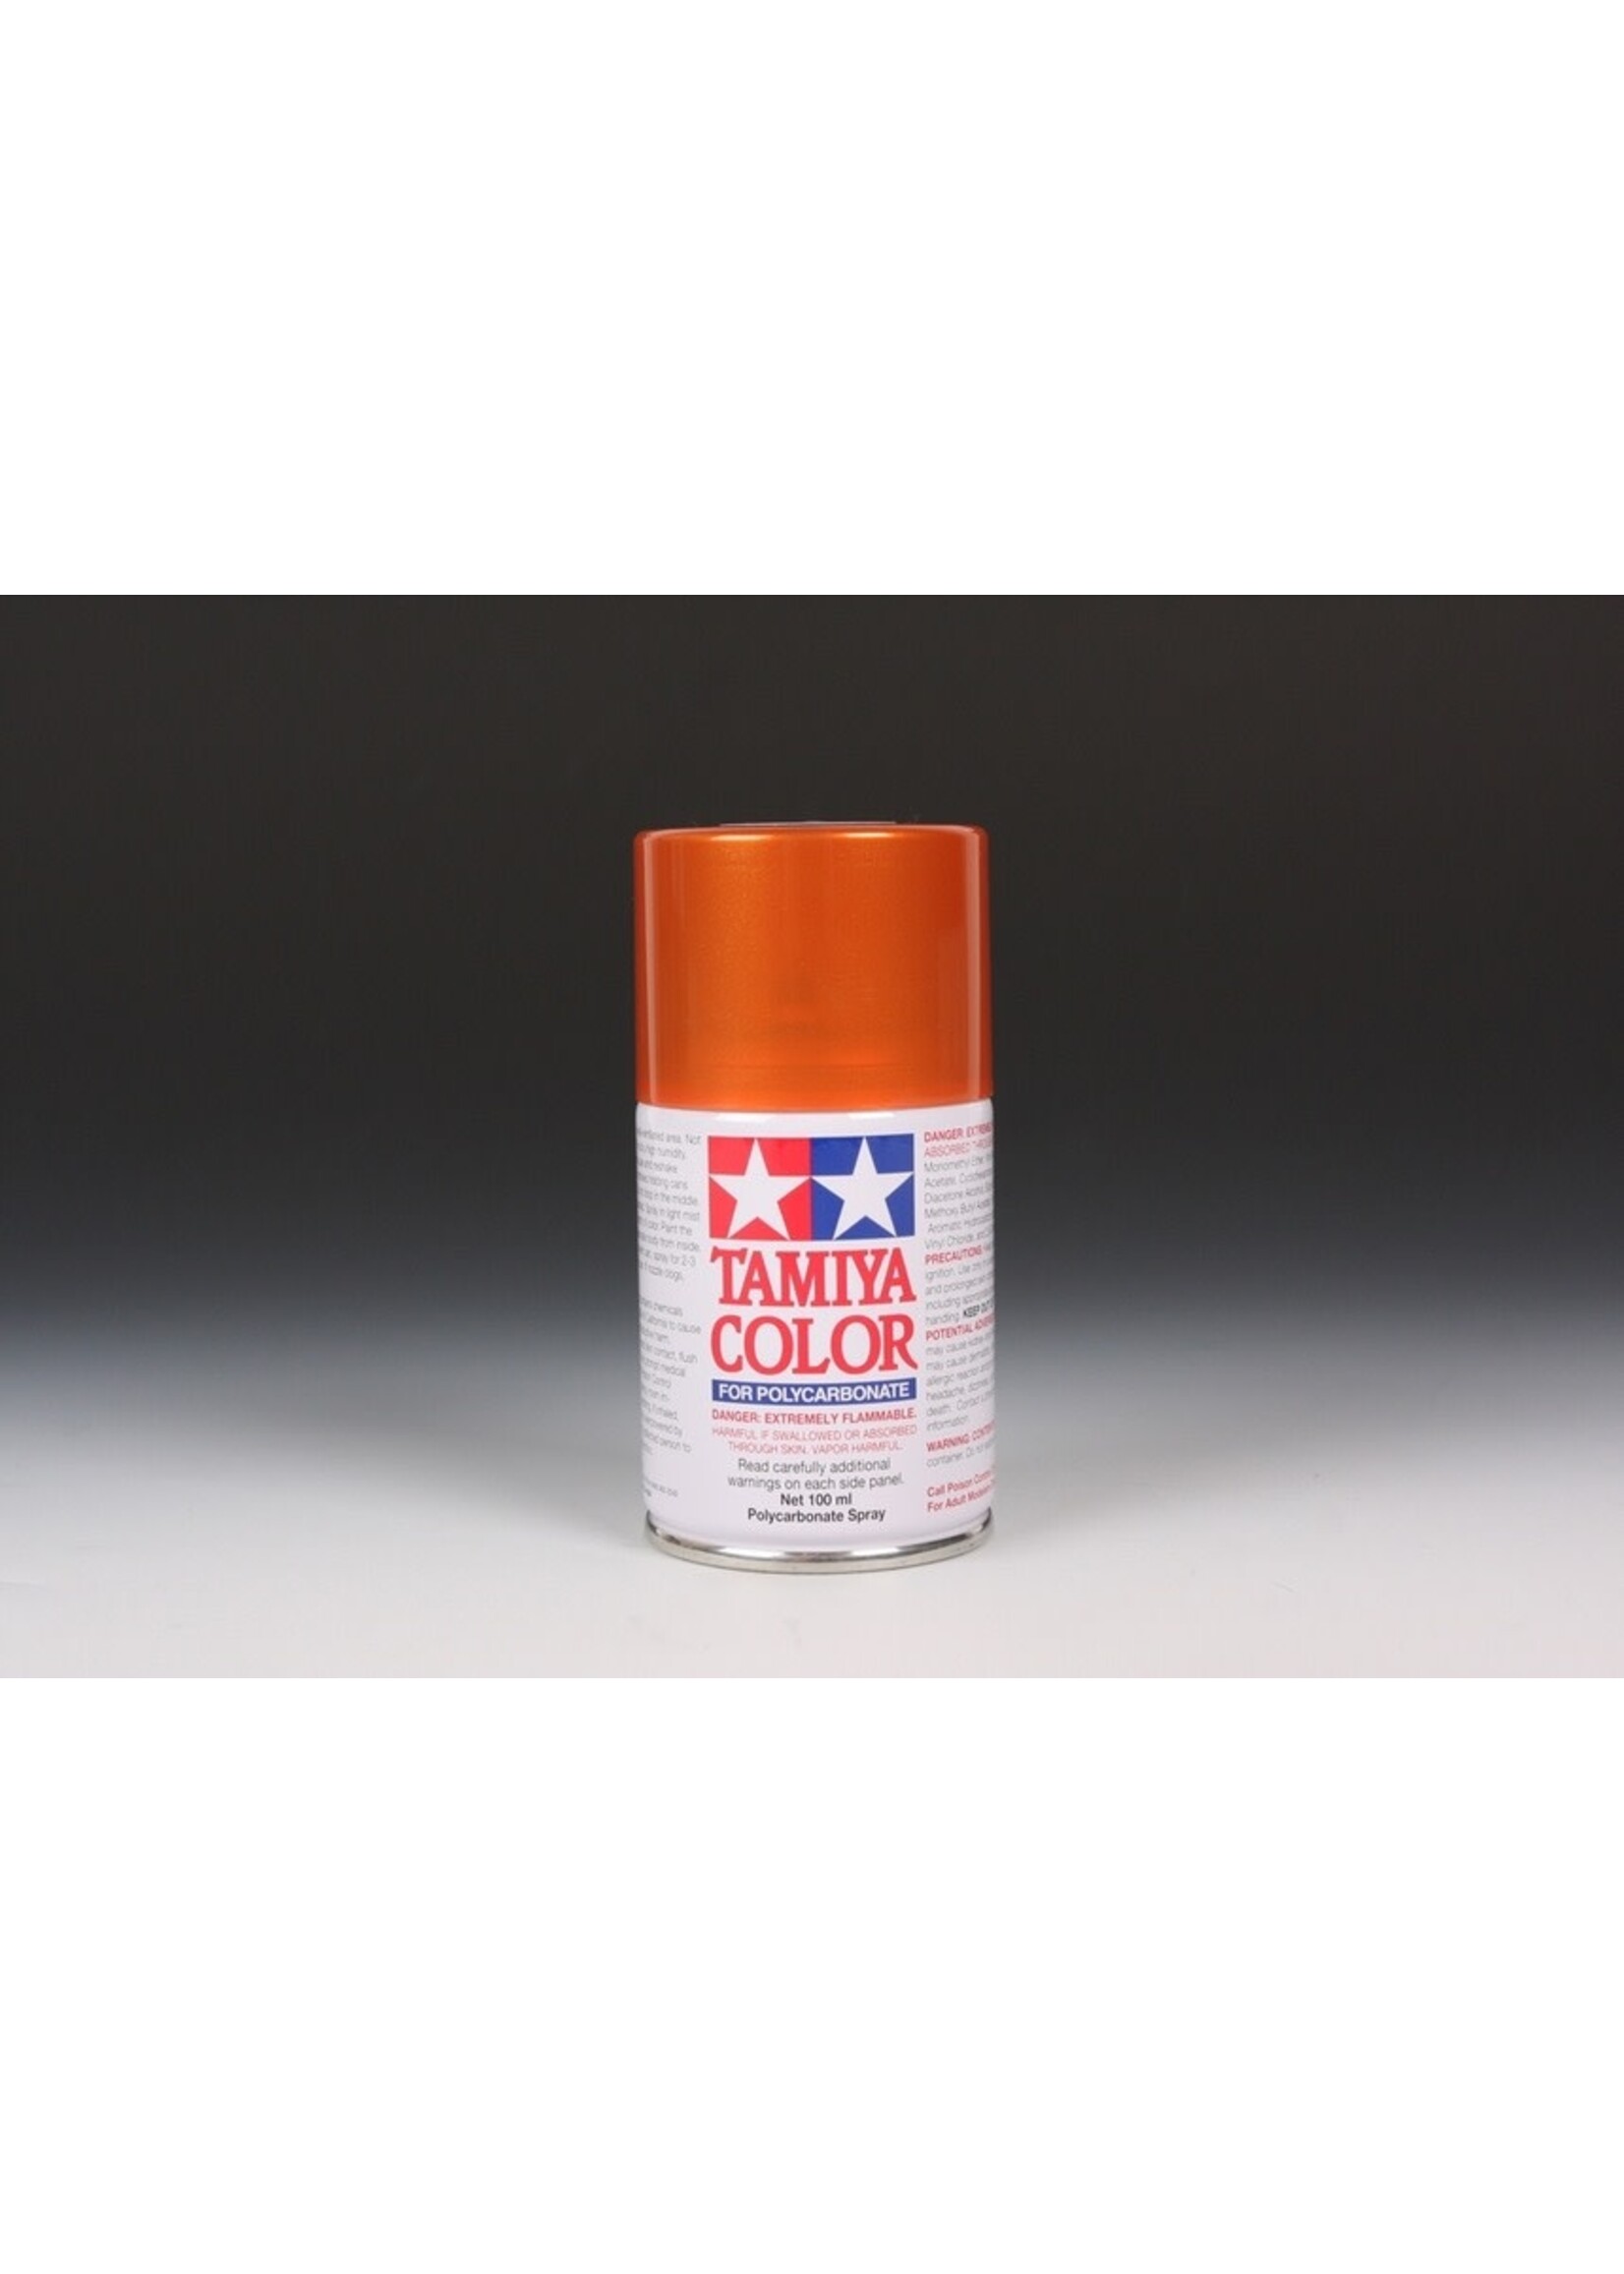 Tamiya TAM86061 Tamiya PS-61 Metallic Orange Lexan Spray Paint (100ml)